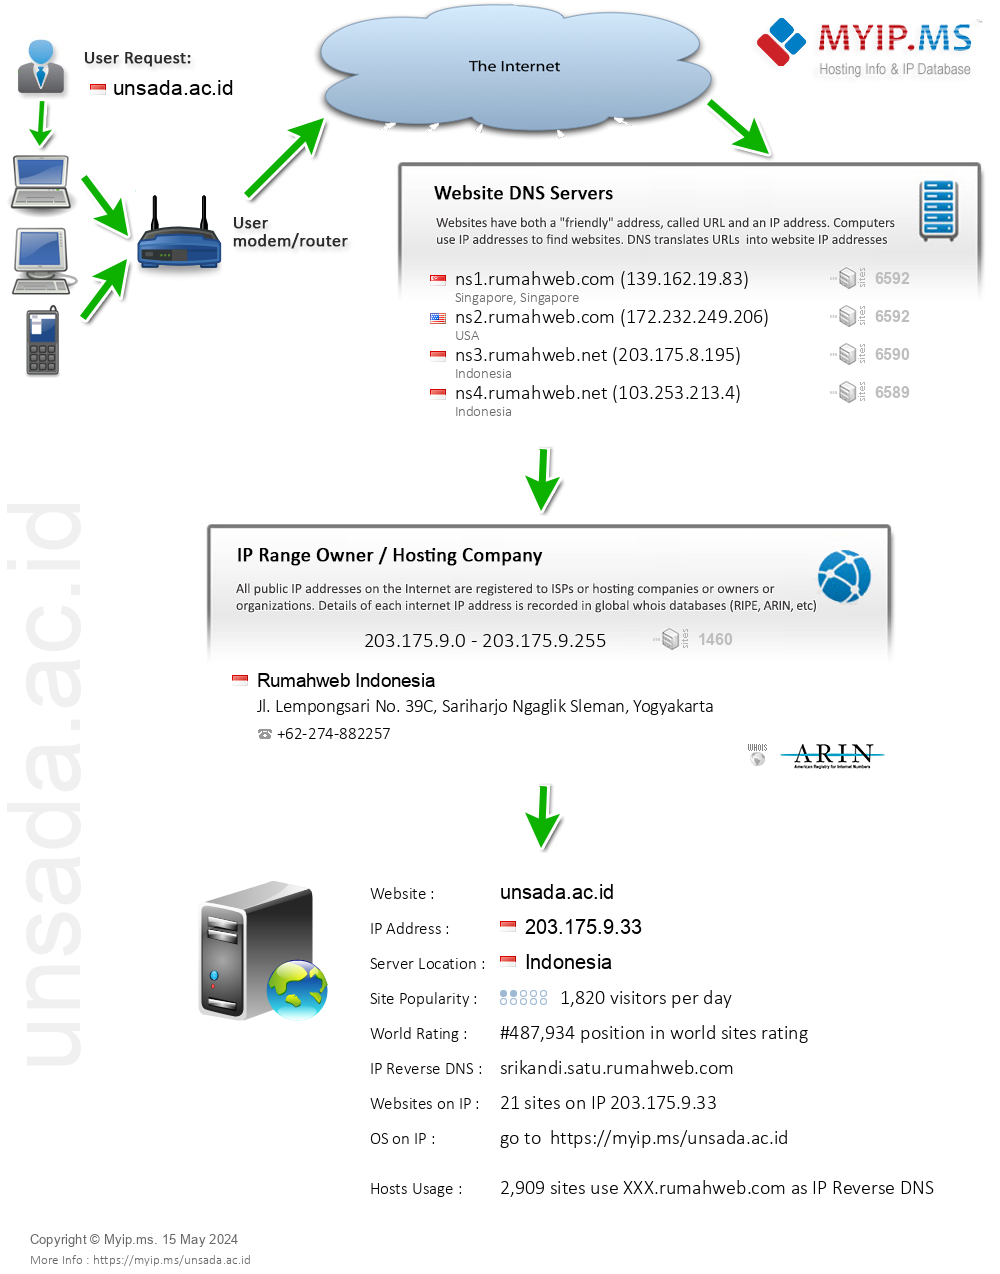 Unsada.ac.id - Website Hosting Visual IP Diagram